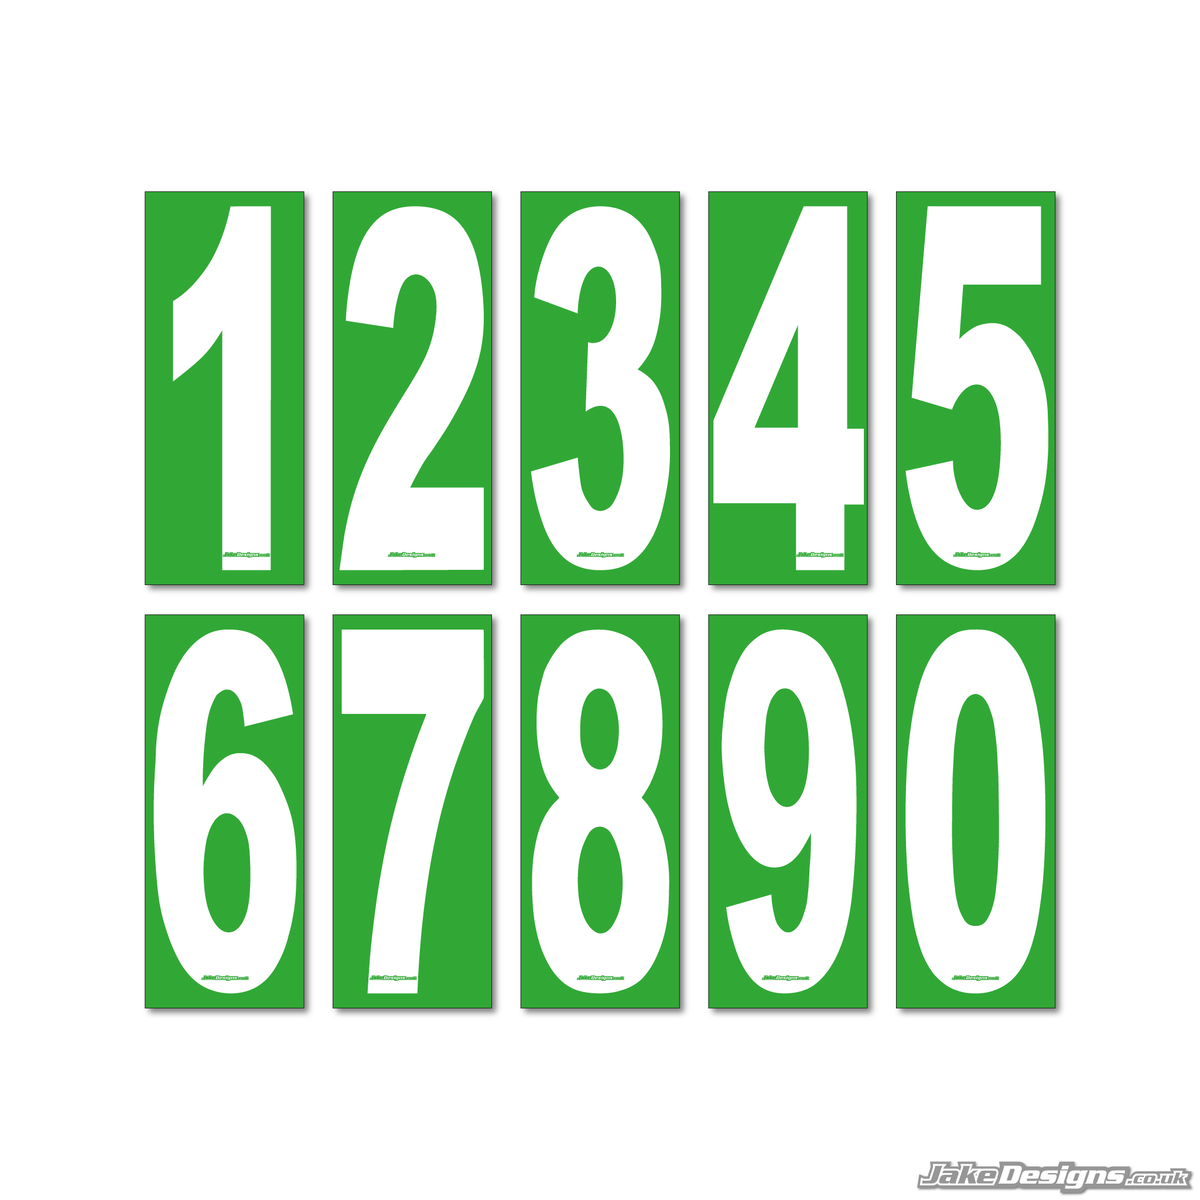 4 X White Numbers / Letters On A Green Background - European / OTK Kar ...